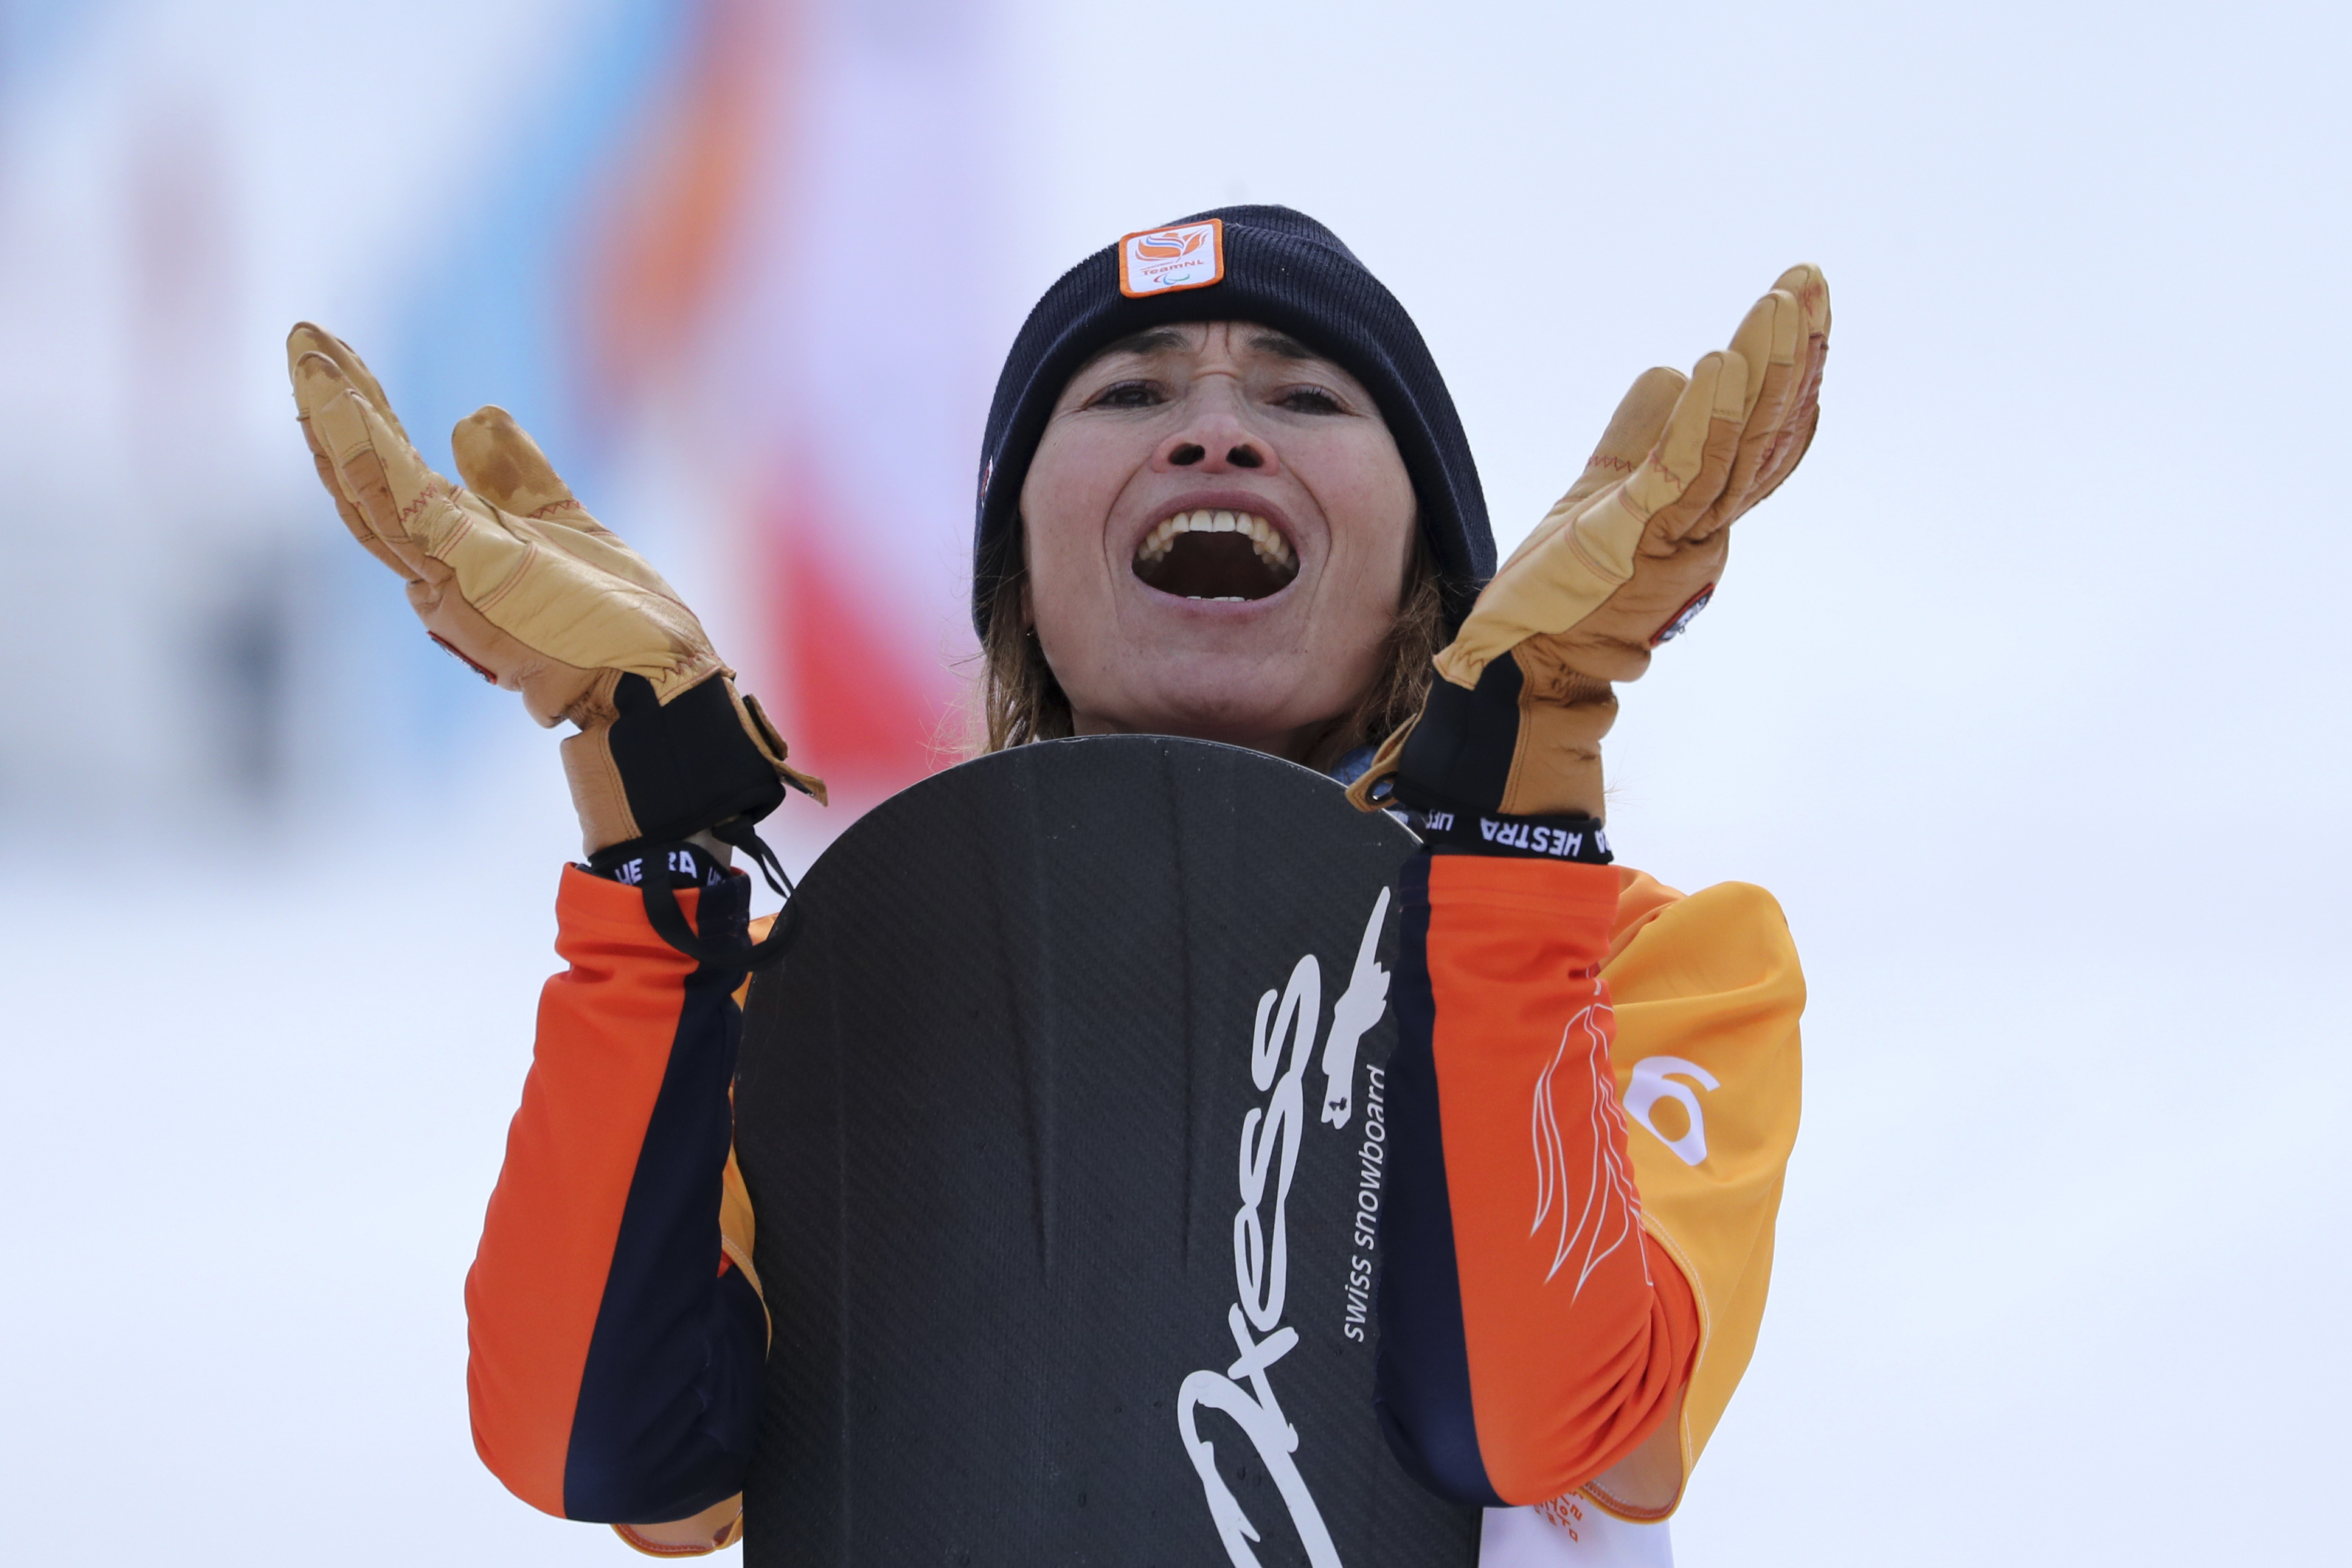 klok Berucht legering Dutch snowboarder Bibian Mentel-Spee wins Winter Paralympic gold against  the odds - NZ Herald